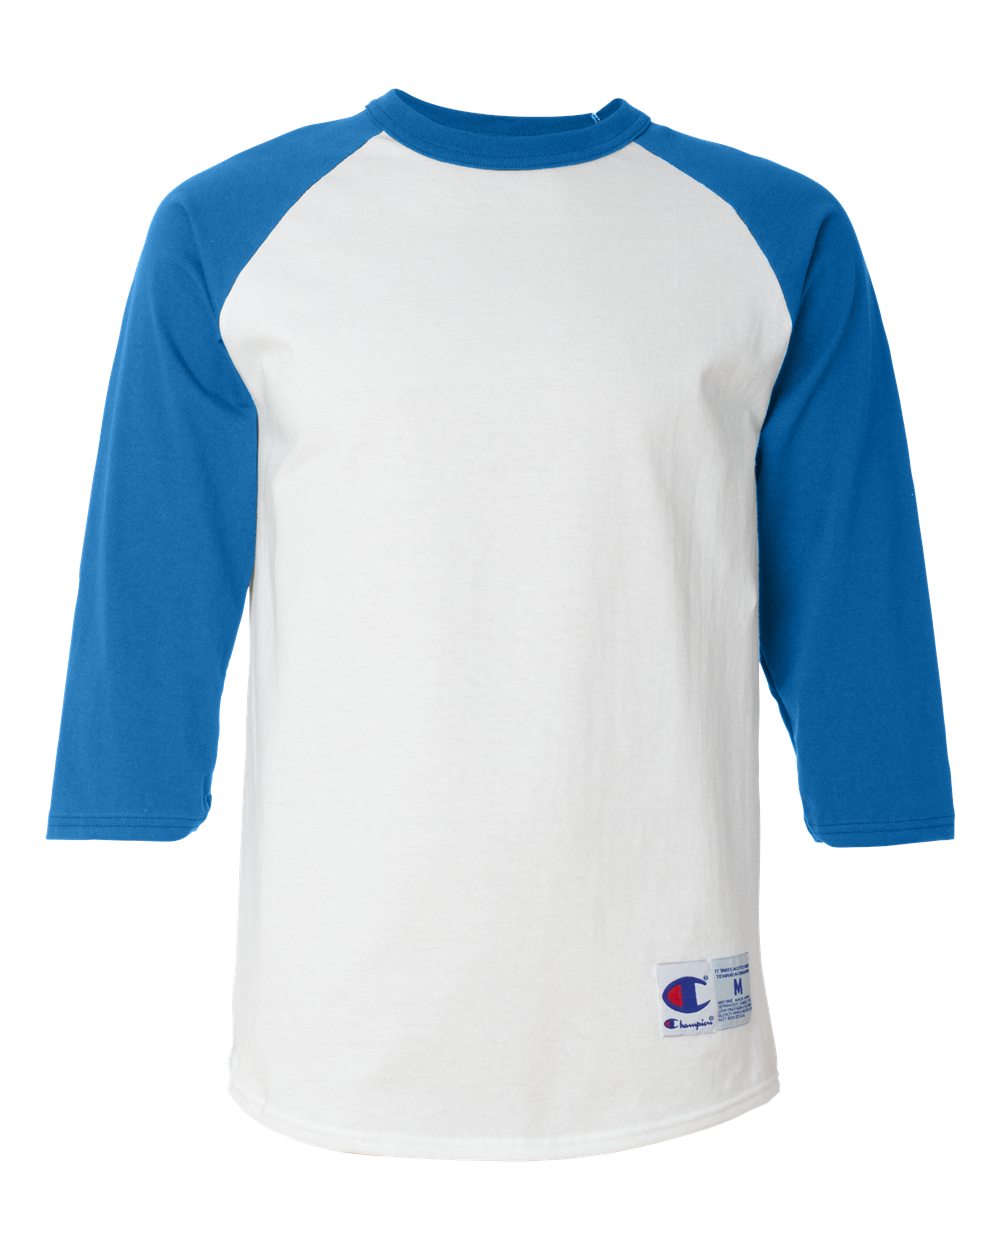 champion adult 3/4-quarter sleeve raglan baseball tee white team blue